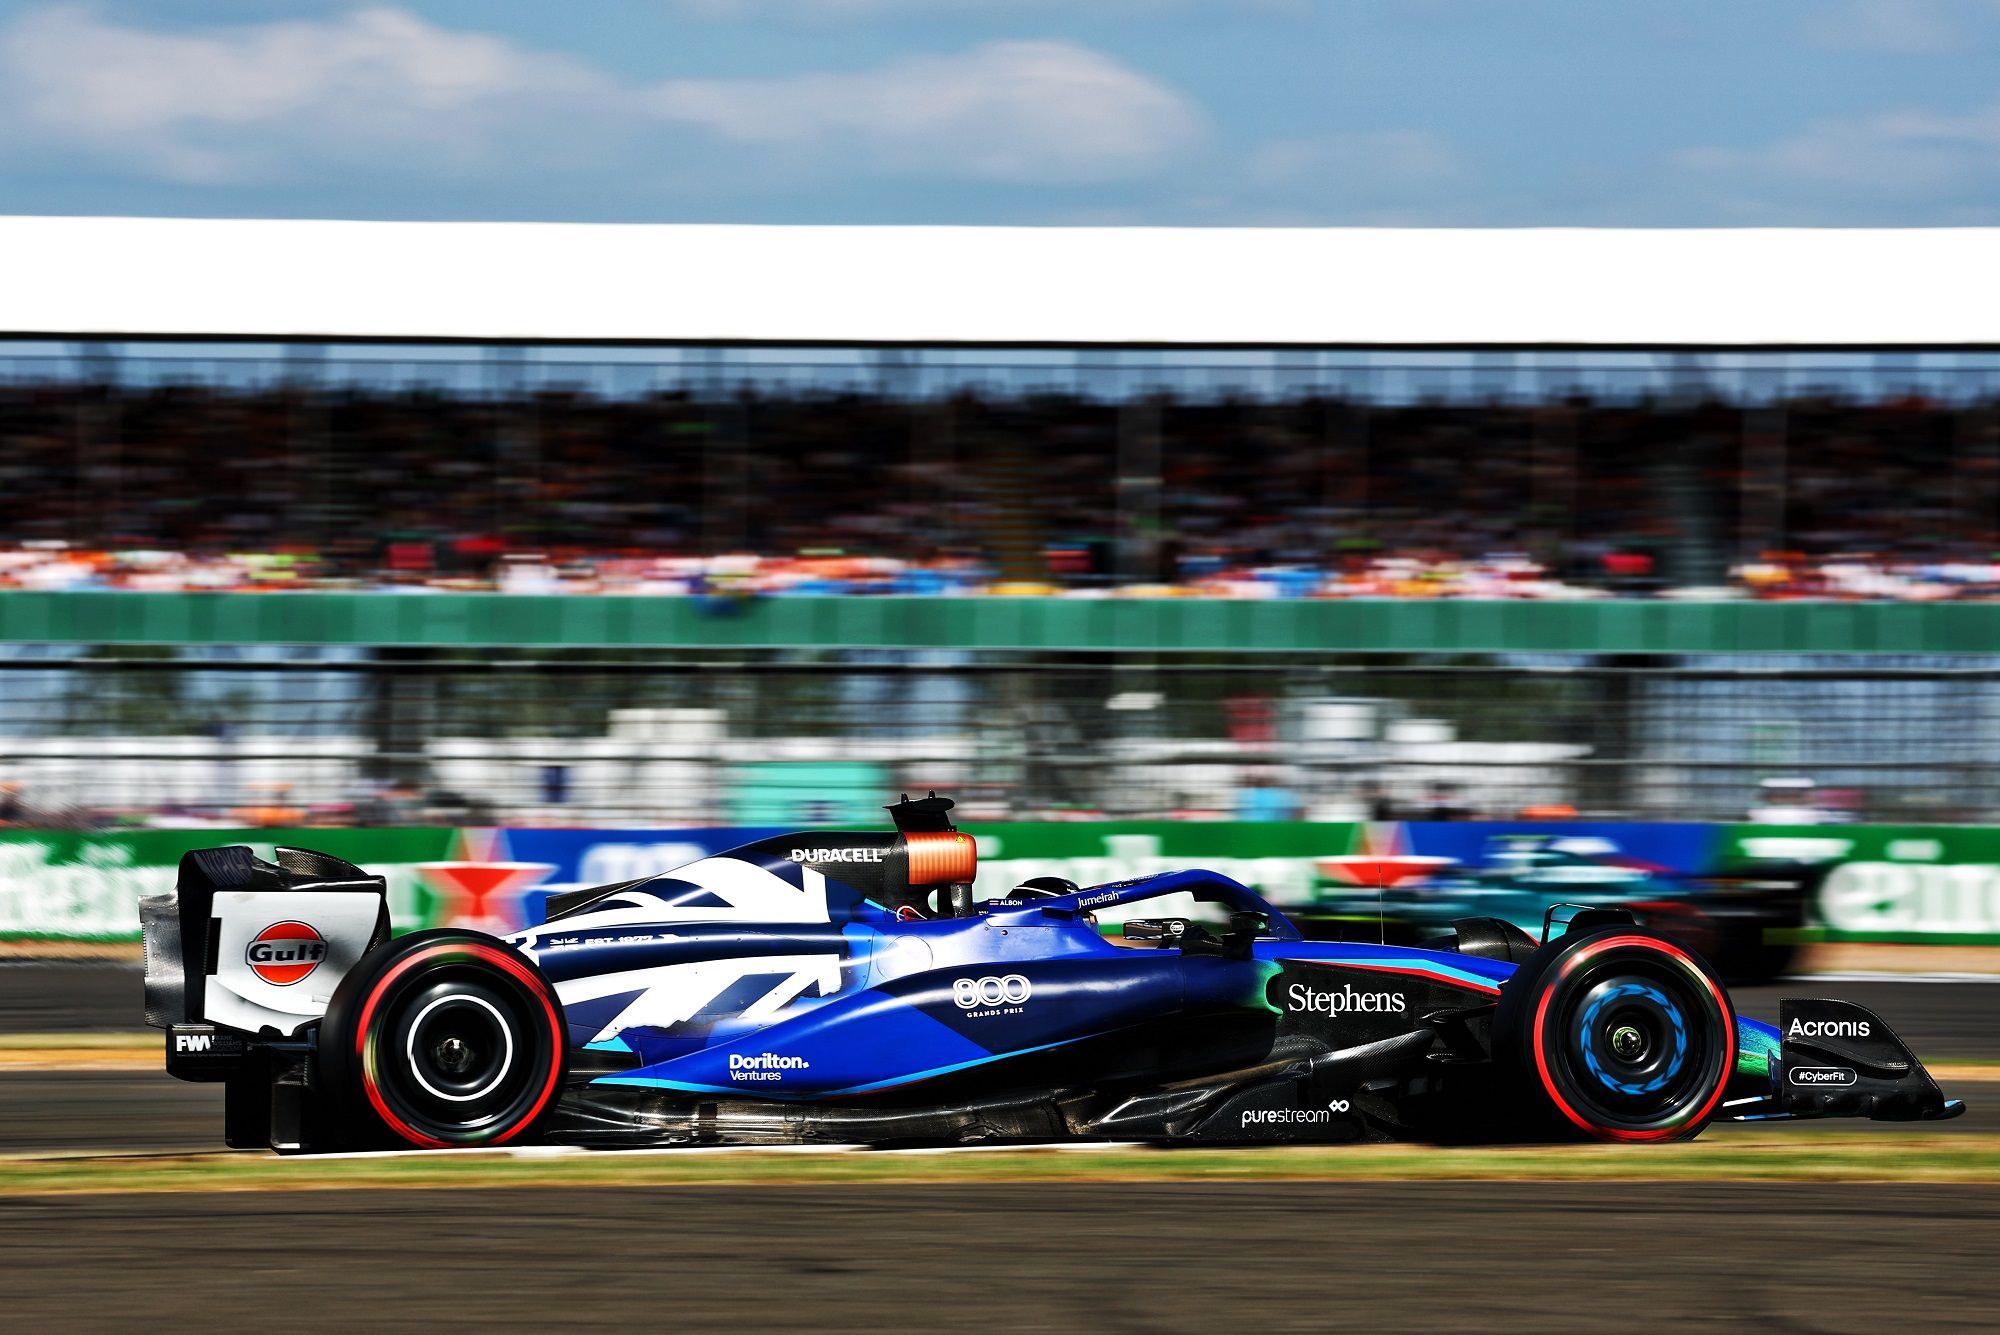 F1 British GP, Fri: Close one lap pace; Williams surprise & more